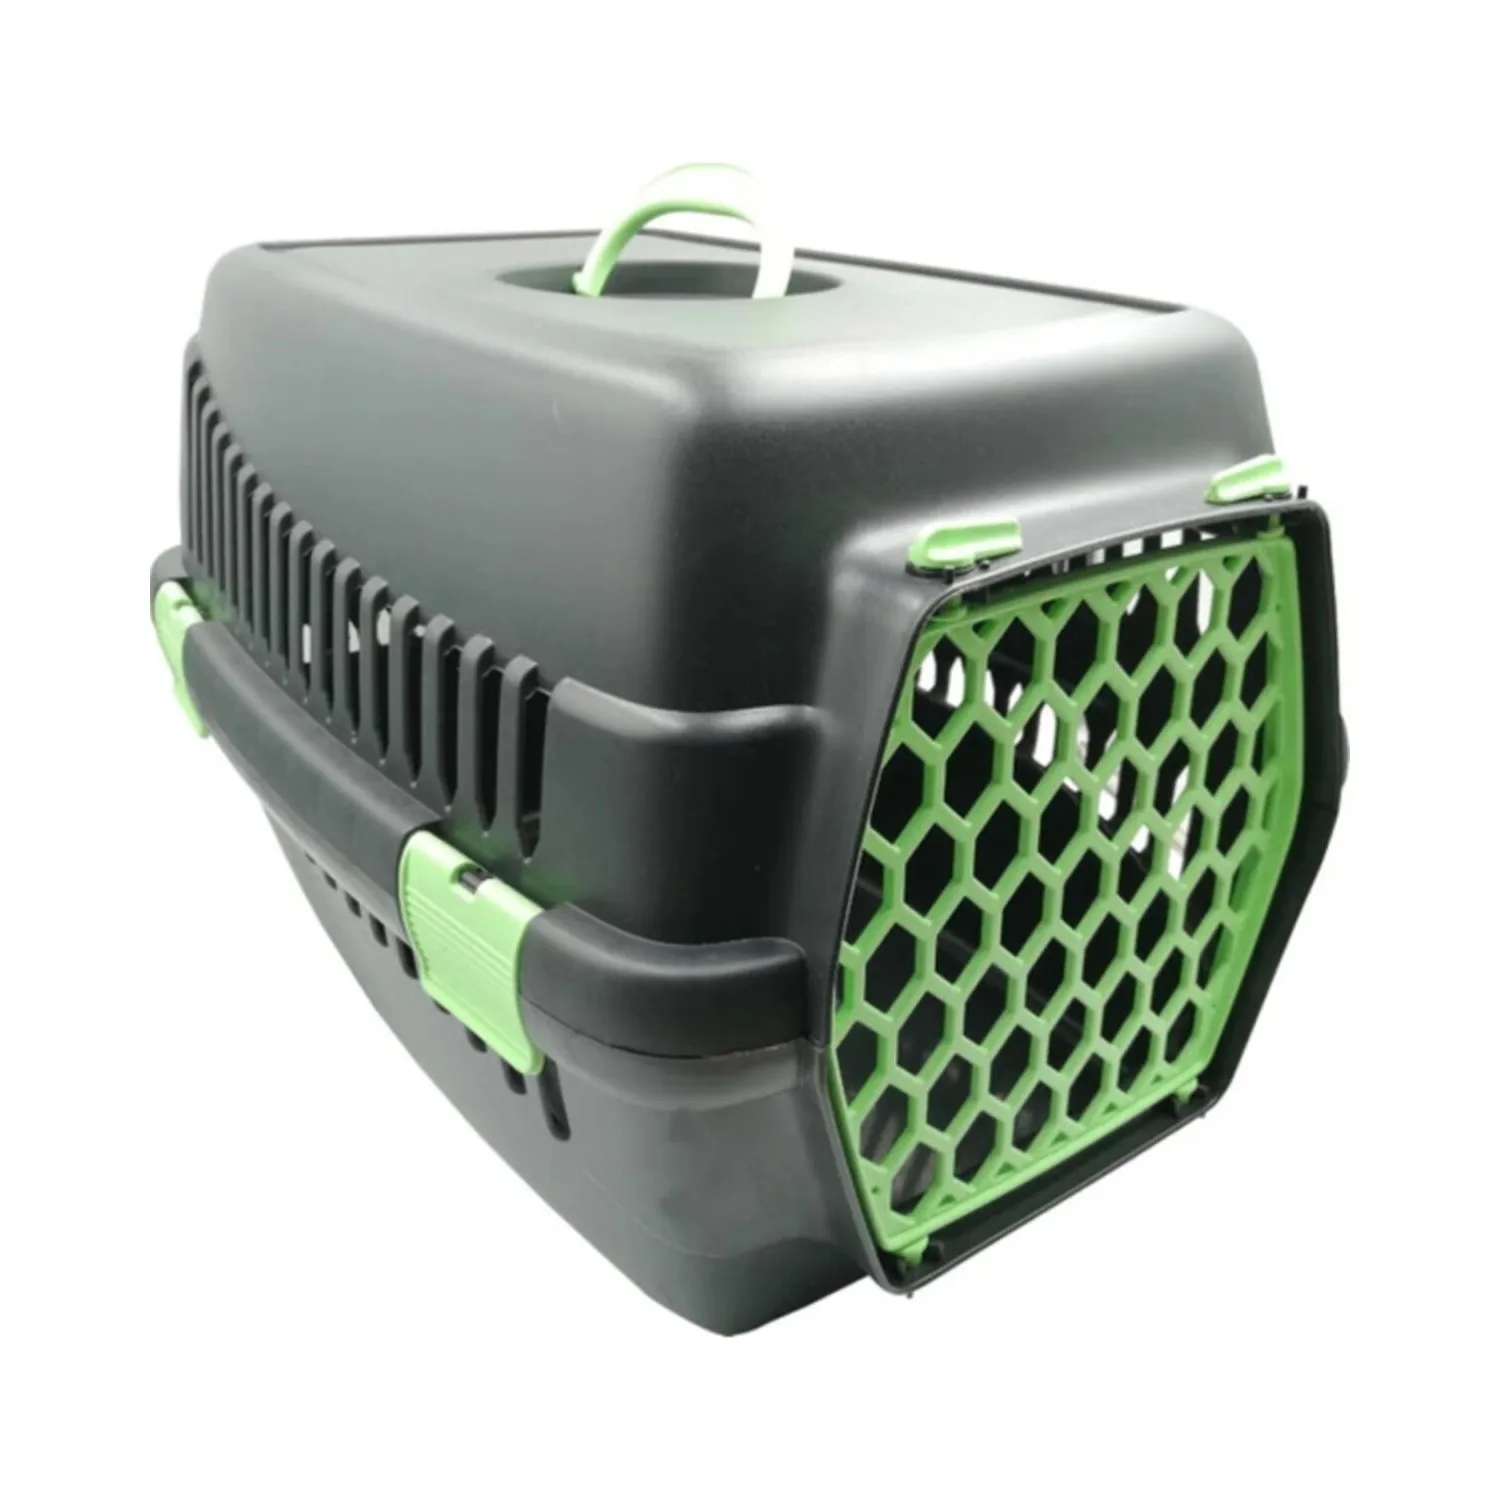 

domestic animal dog cat bird care suitcase bag transport unbreakable transparent resistant durable Trustworthy trip travel